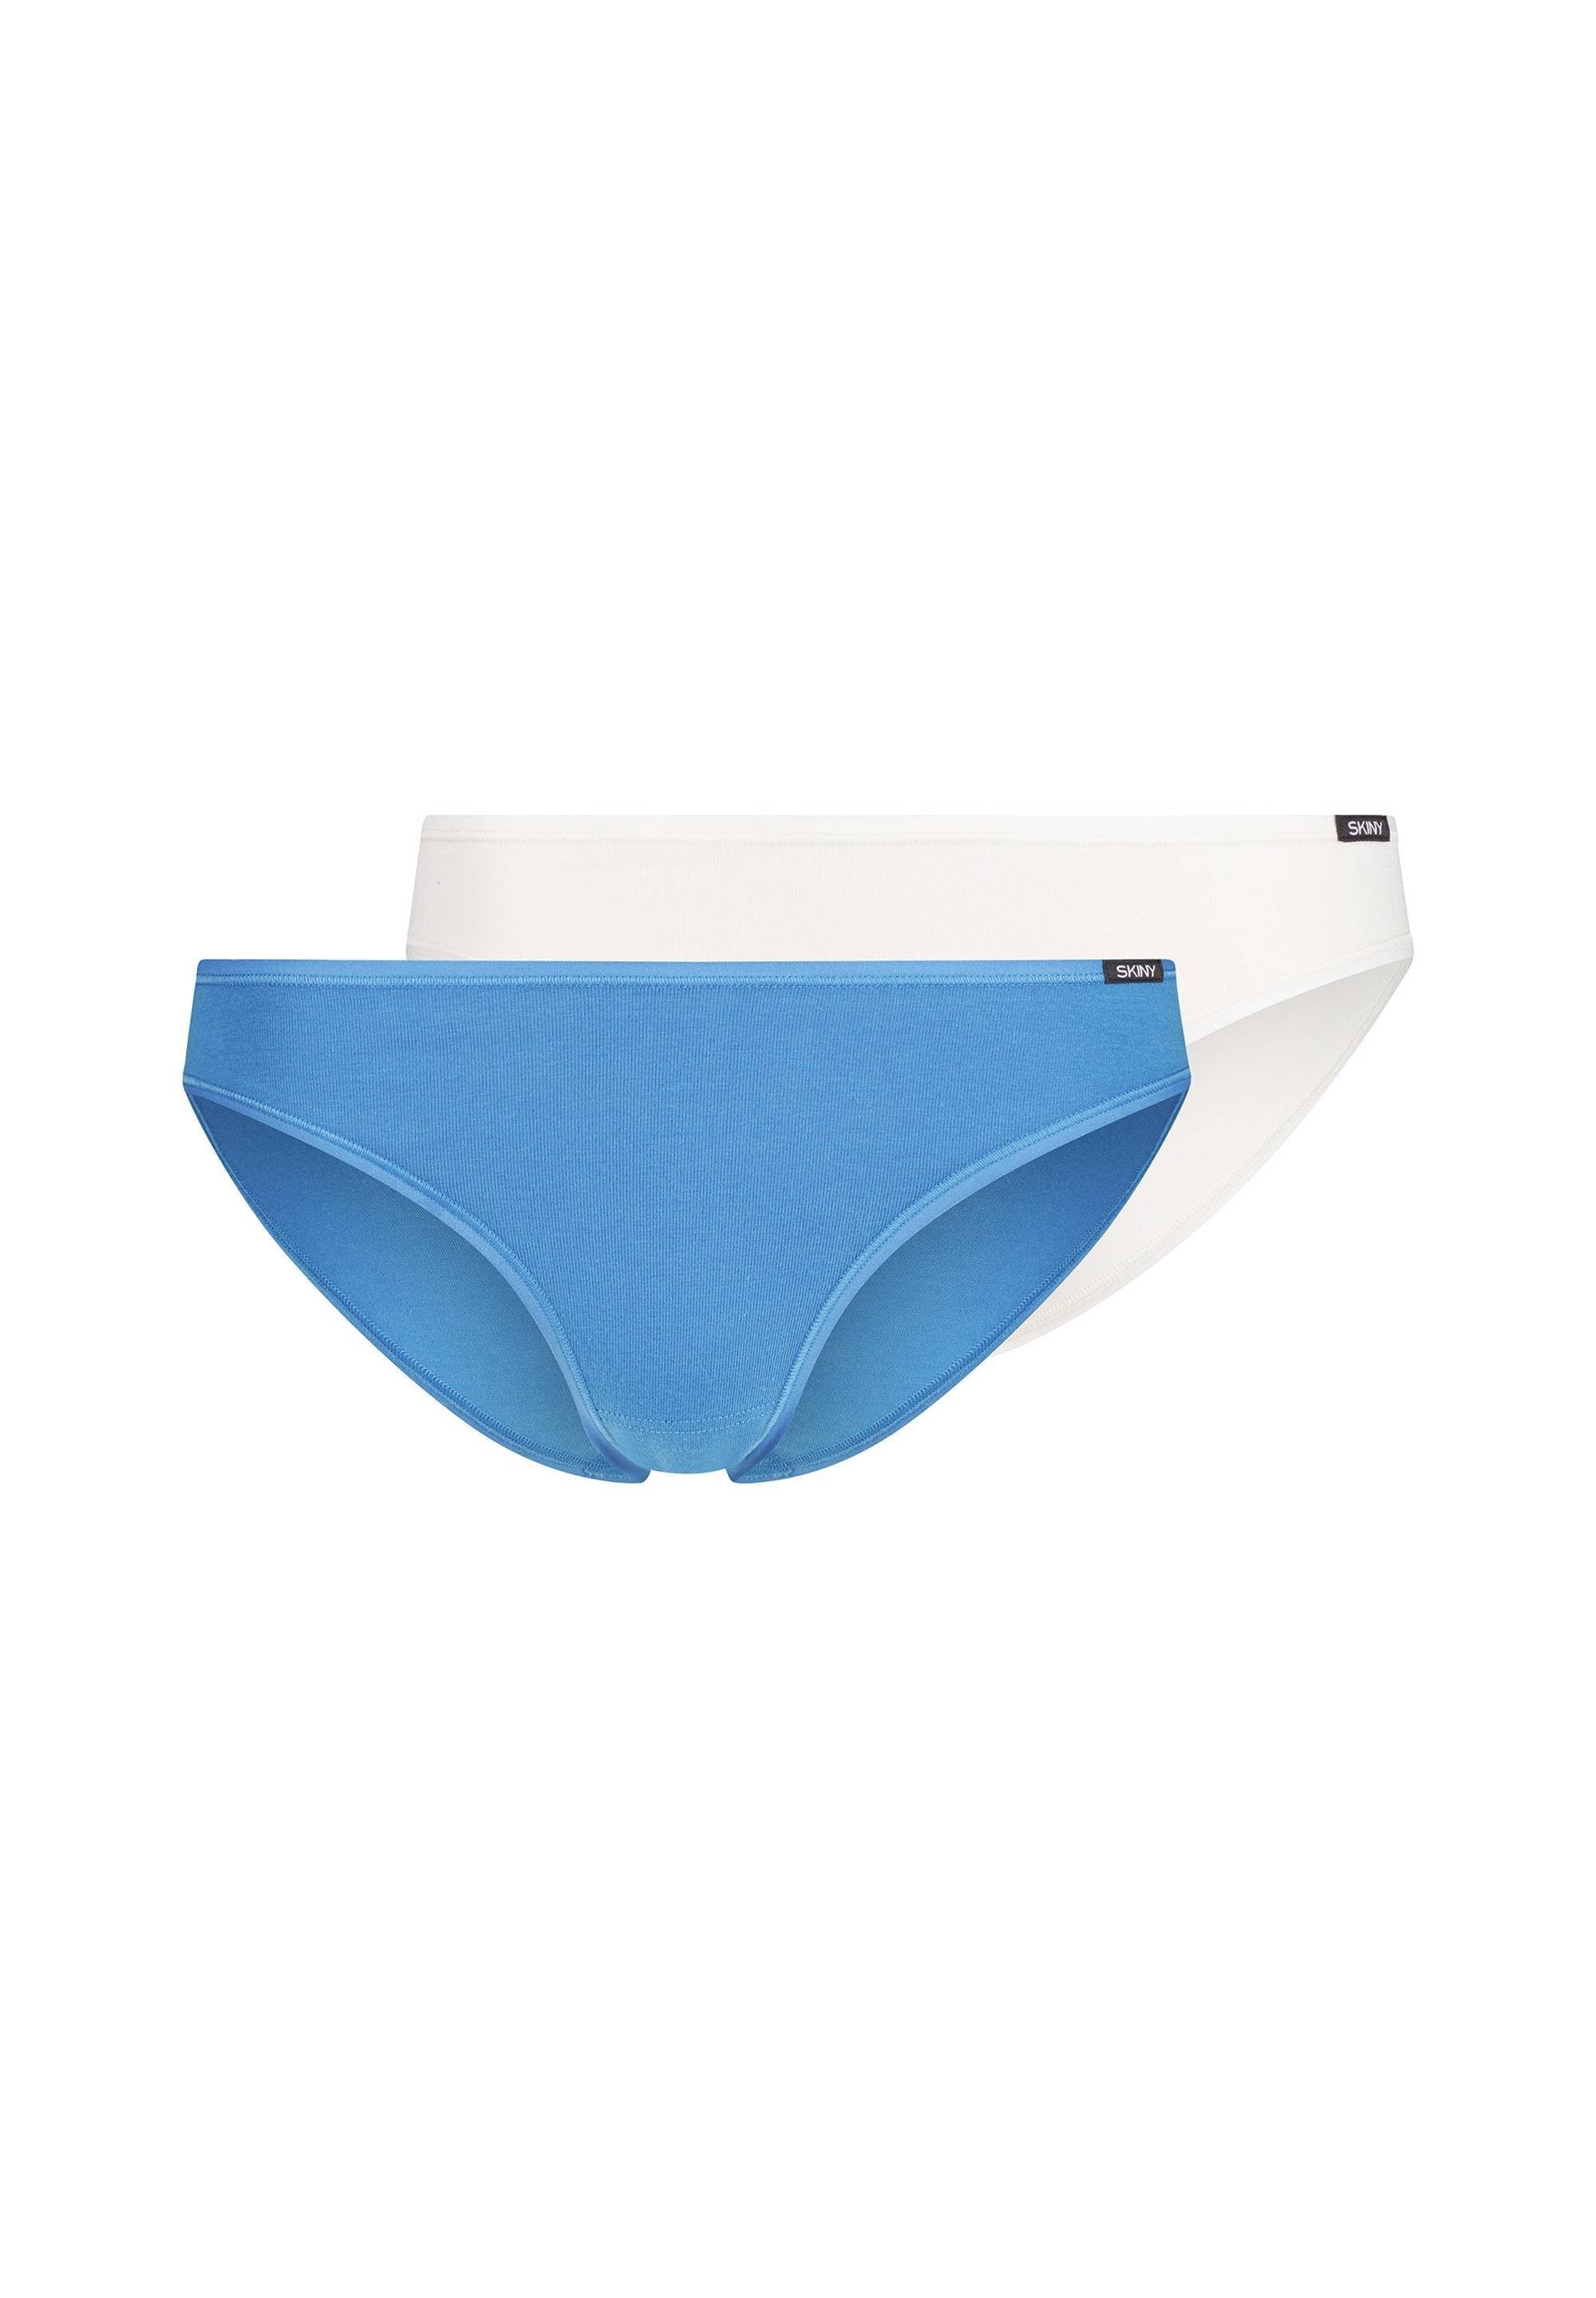 2er Rio Damen Slip, Slip, Slip Bikini Hellblau/Weiß - Cotton Skiny Pack